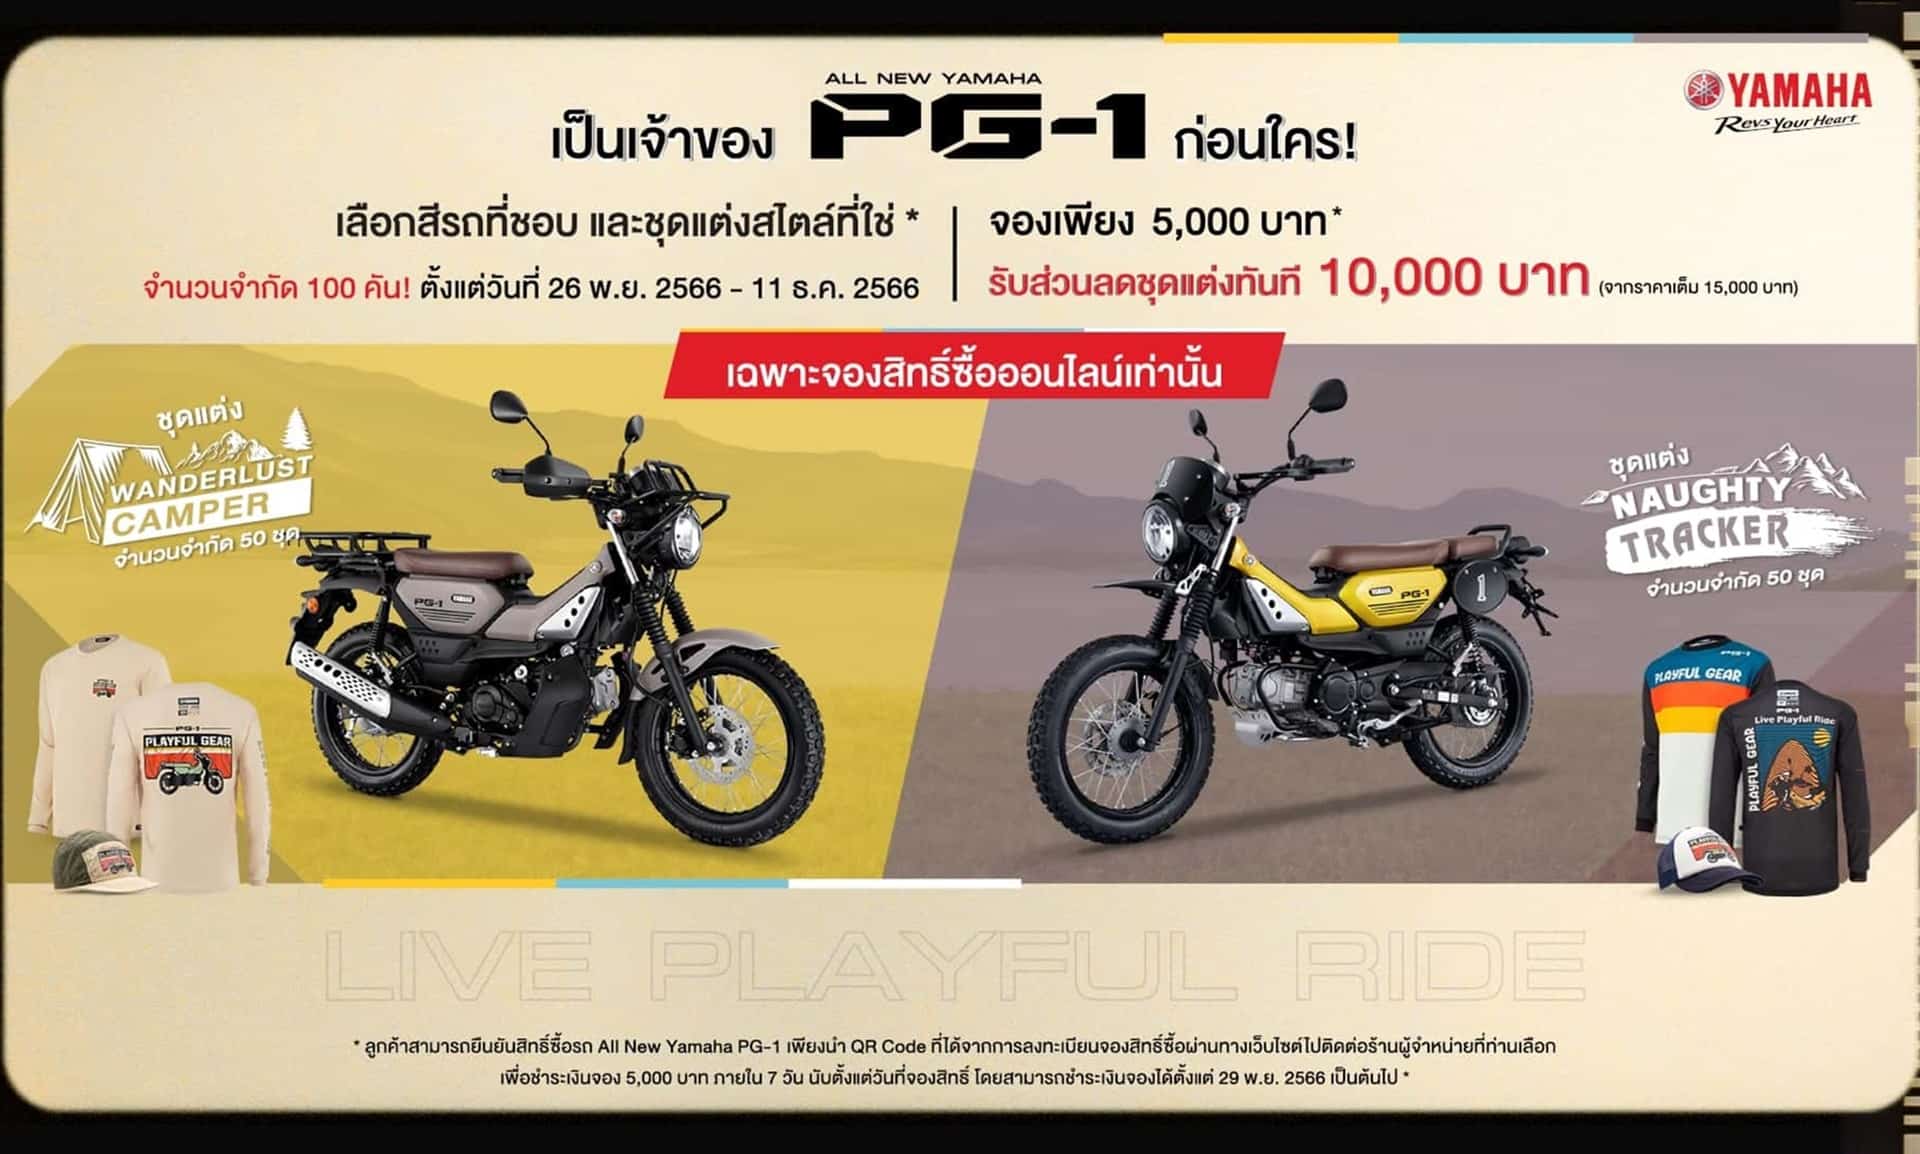 La novedosa Yamaha PG-1 debuta oficialmente en Tailandia